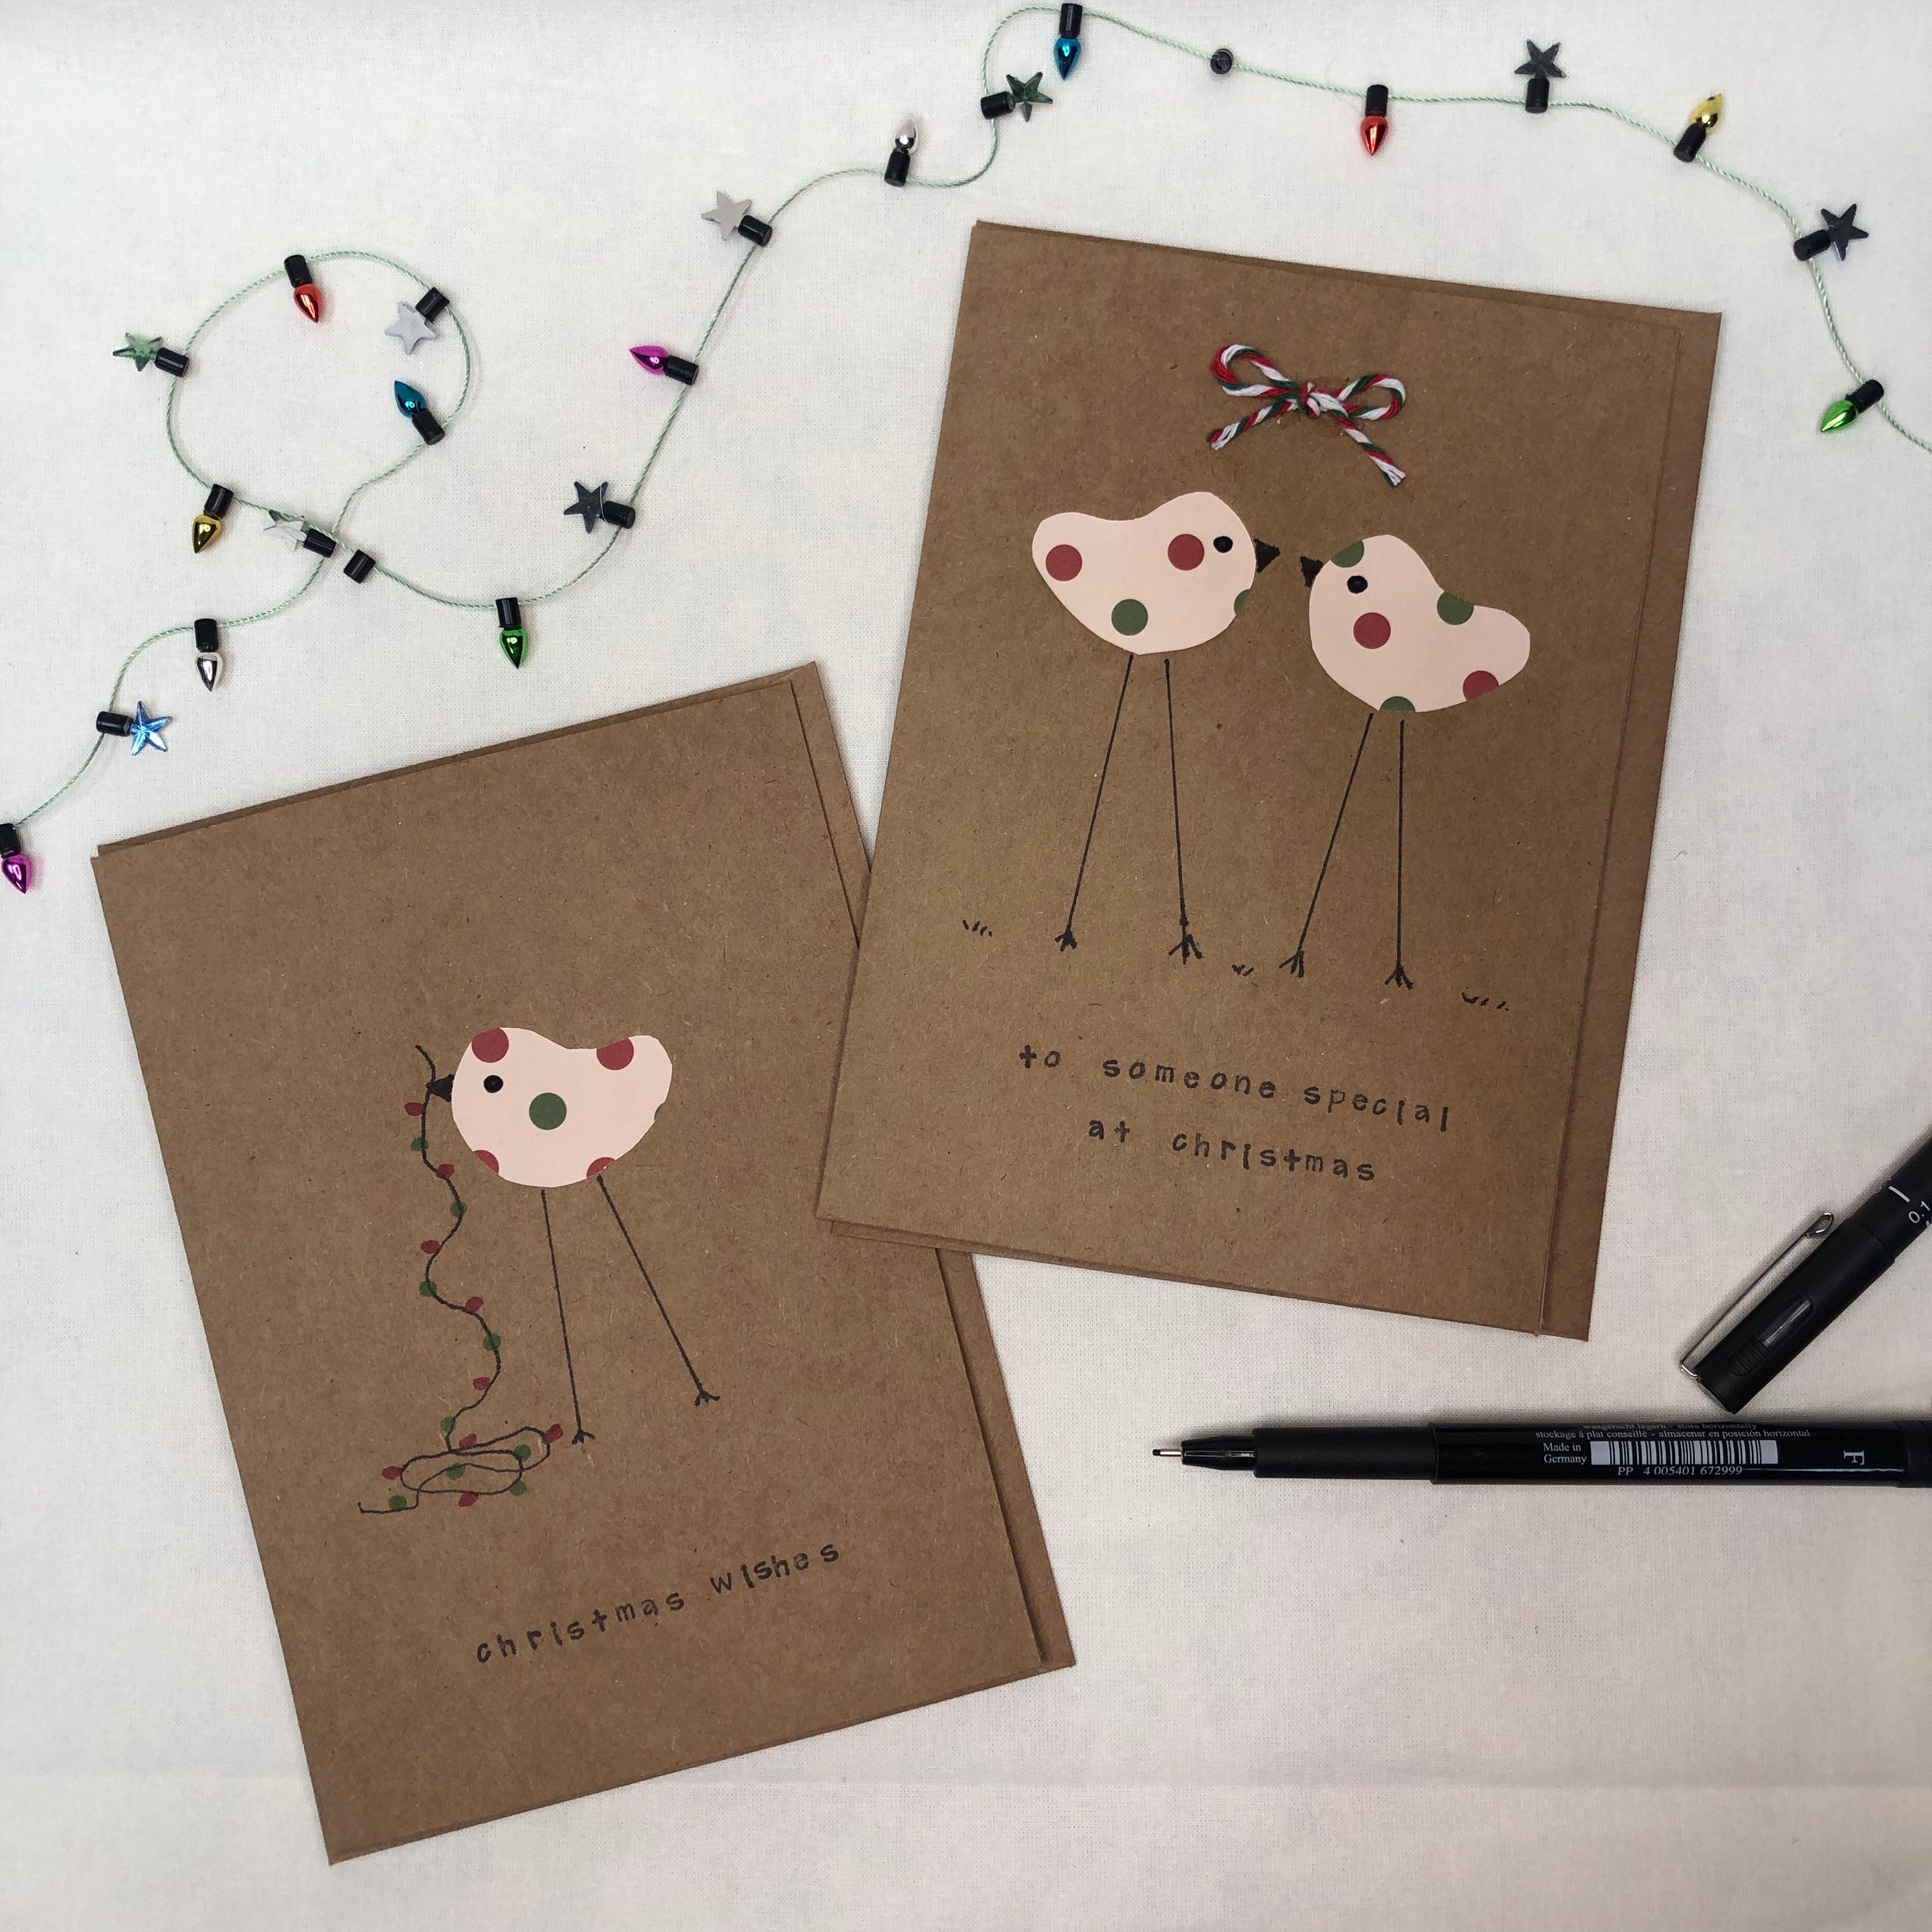 Wishes & Kisses Handmade Christmas Cards: Pack of 4 - Festive Birds